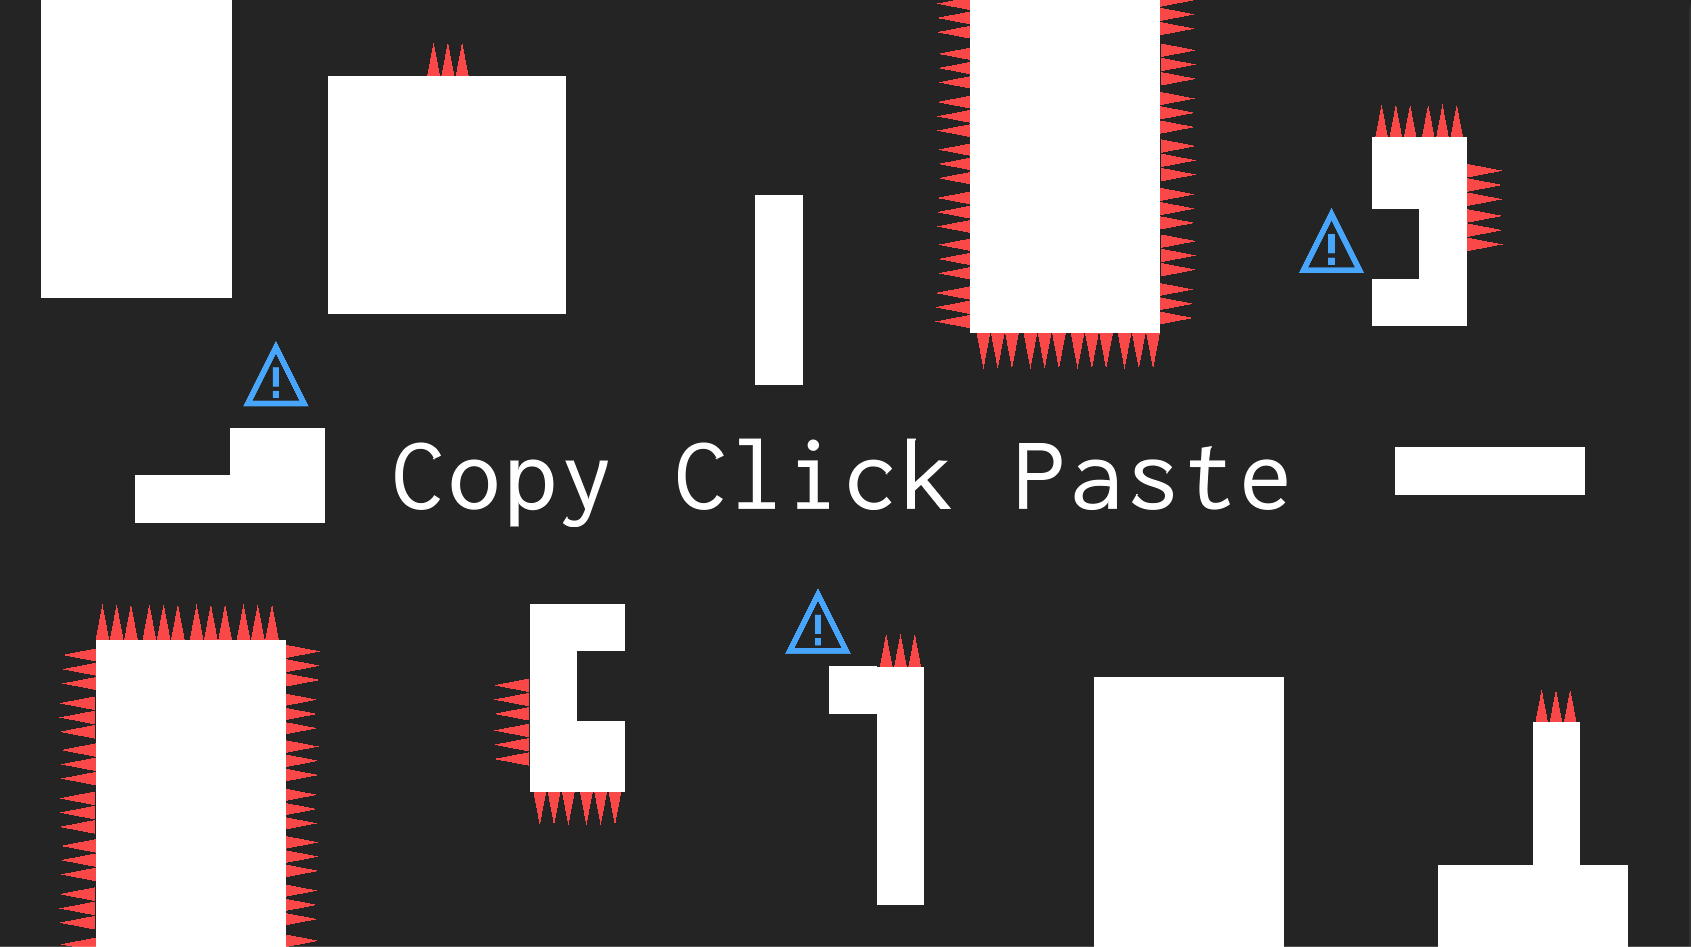 Copy Click Paste